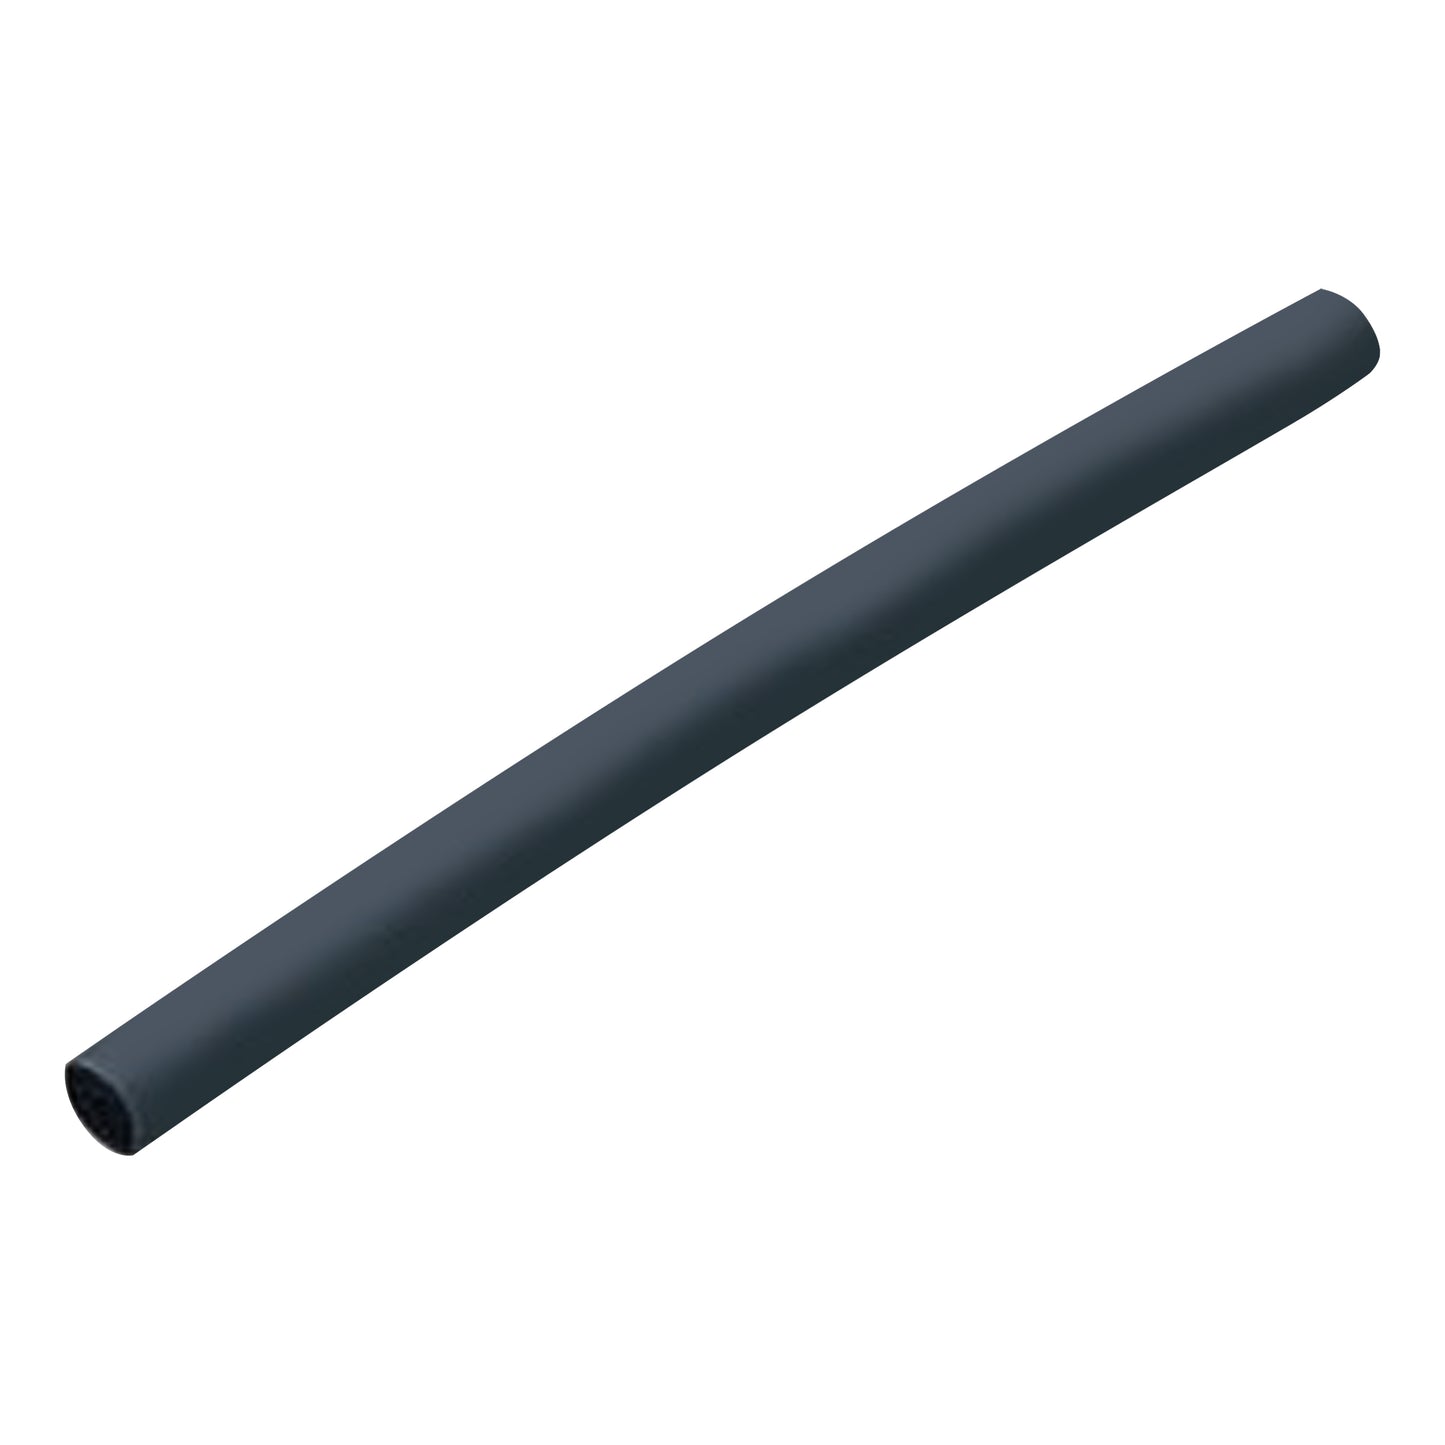 Flexible Thin Single Wall Non-Adhesive Heat Shrink Tubing 2:1 Black 3/32" ID - 48" Inch 4 Pack